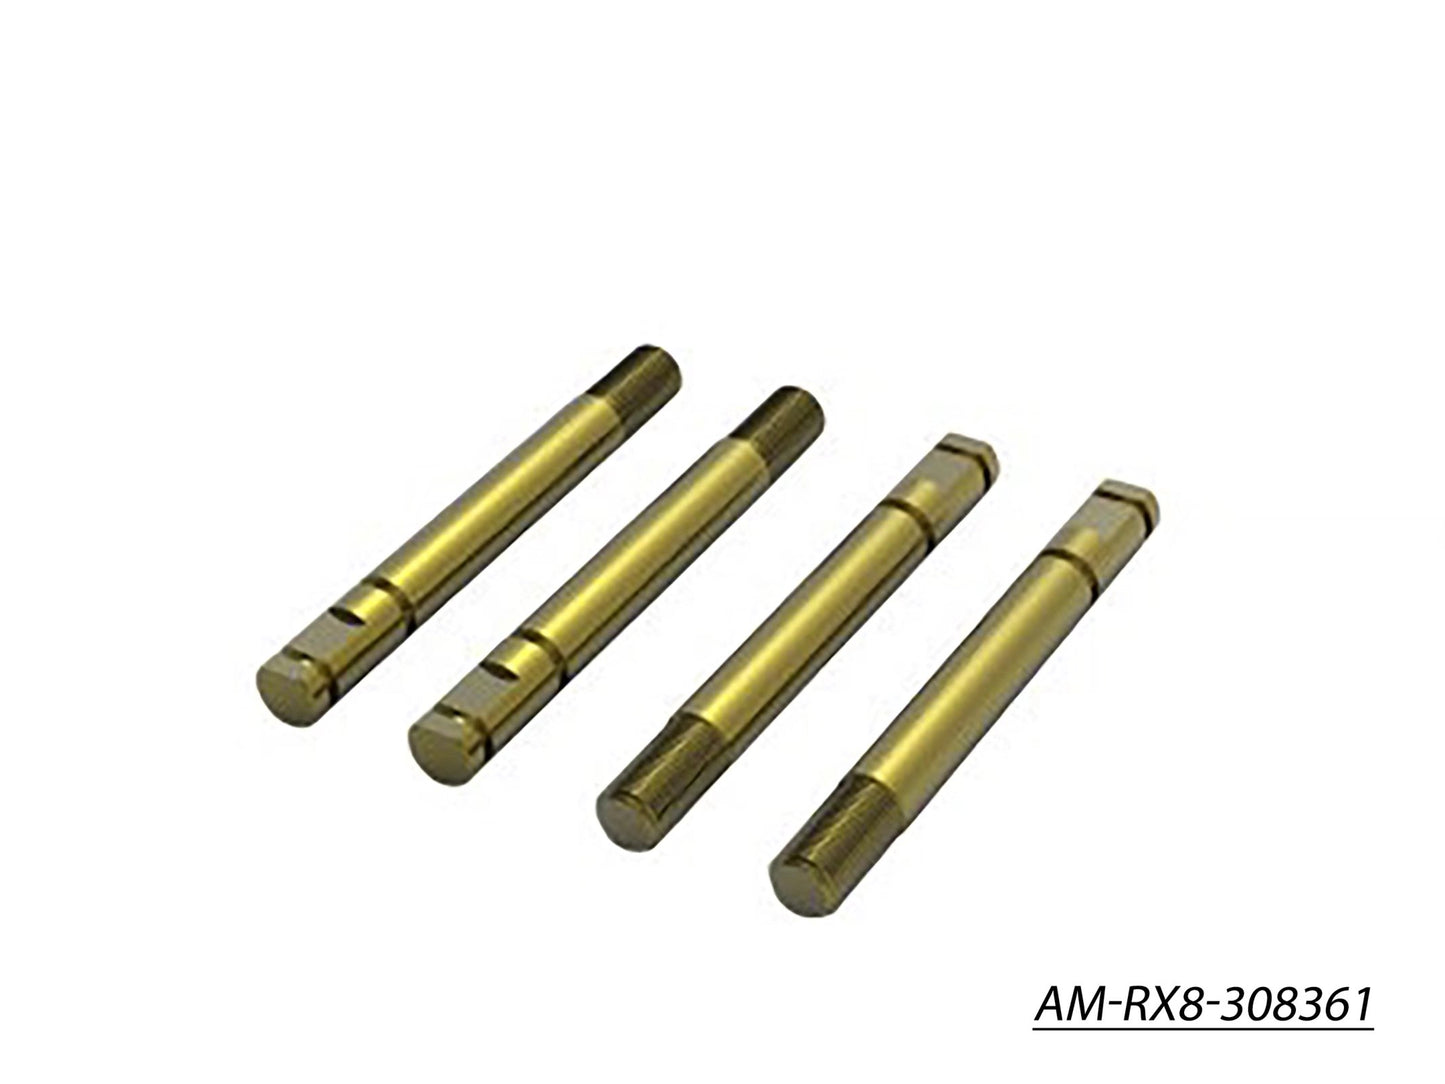 Hardened Shock Shaft - Tini (Spring Steel) (4) (AM-RX8-308361)